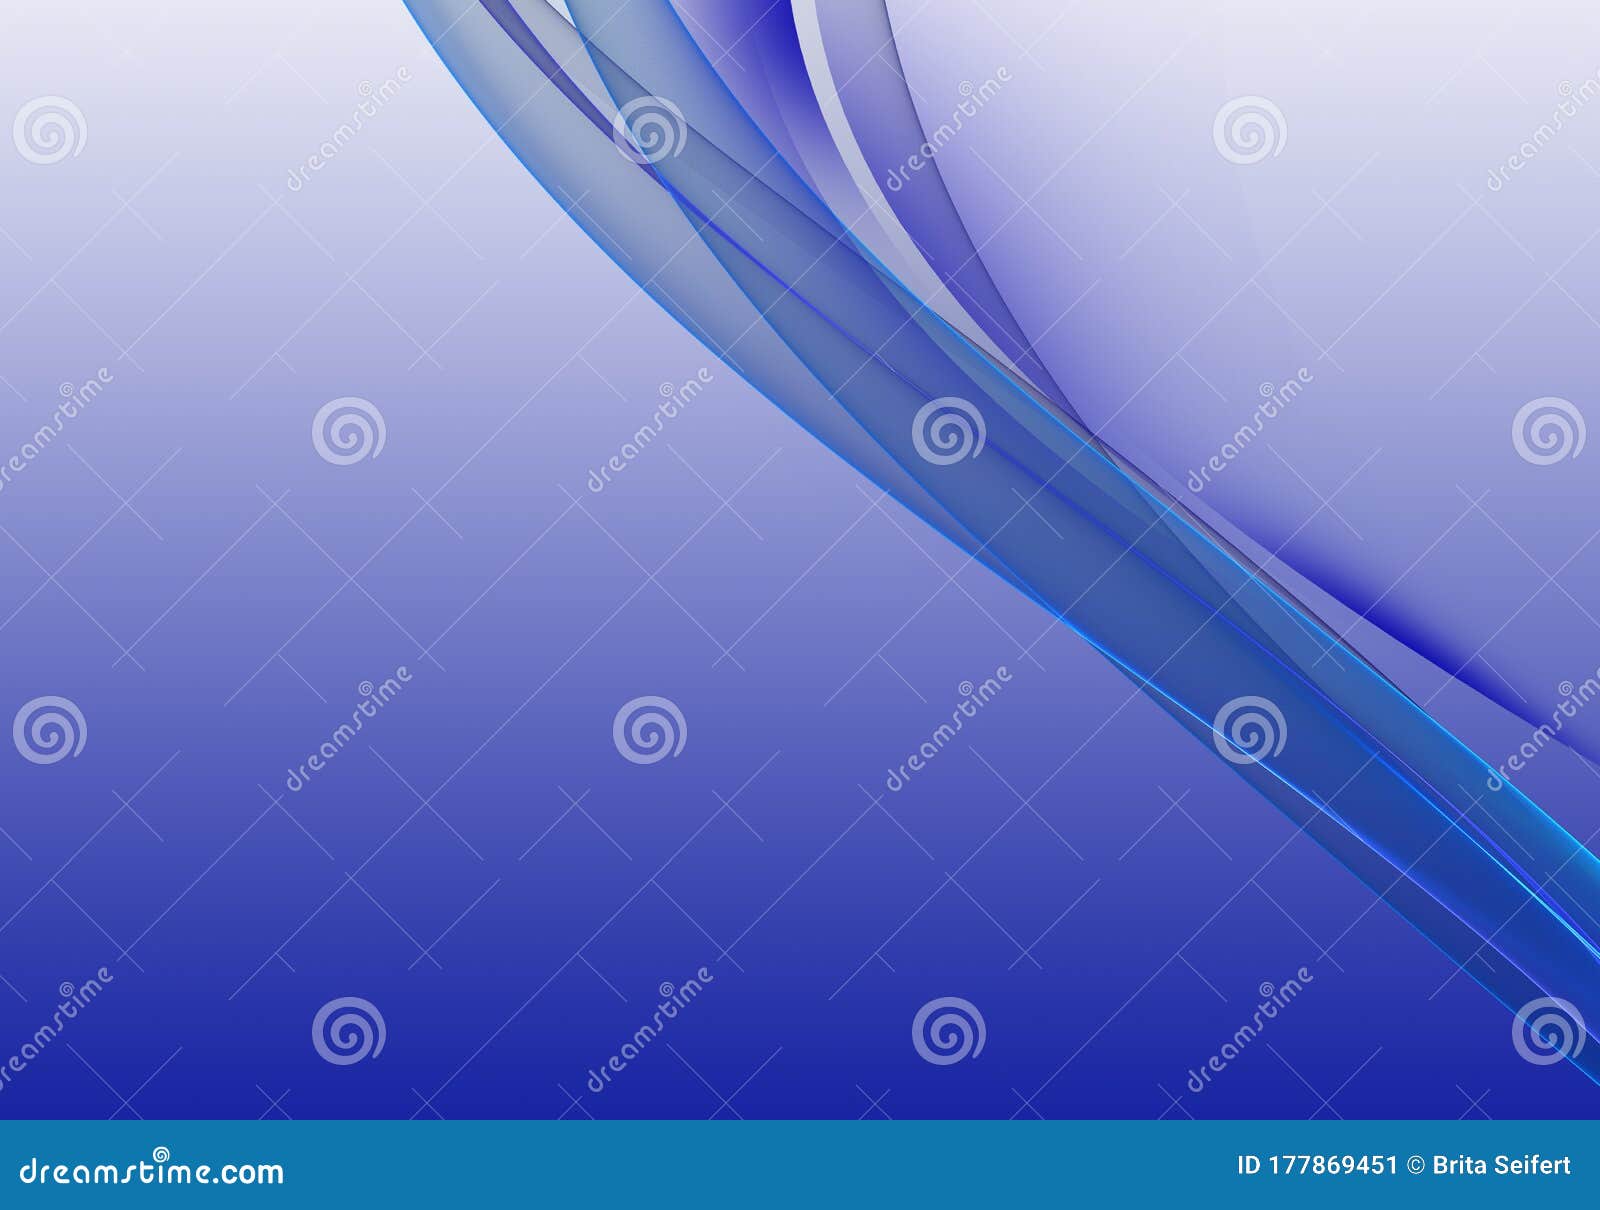 Royal Blue Background Images  Free Download on Freepik